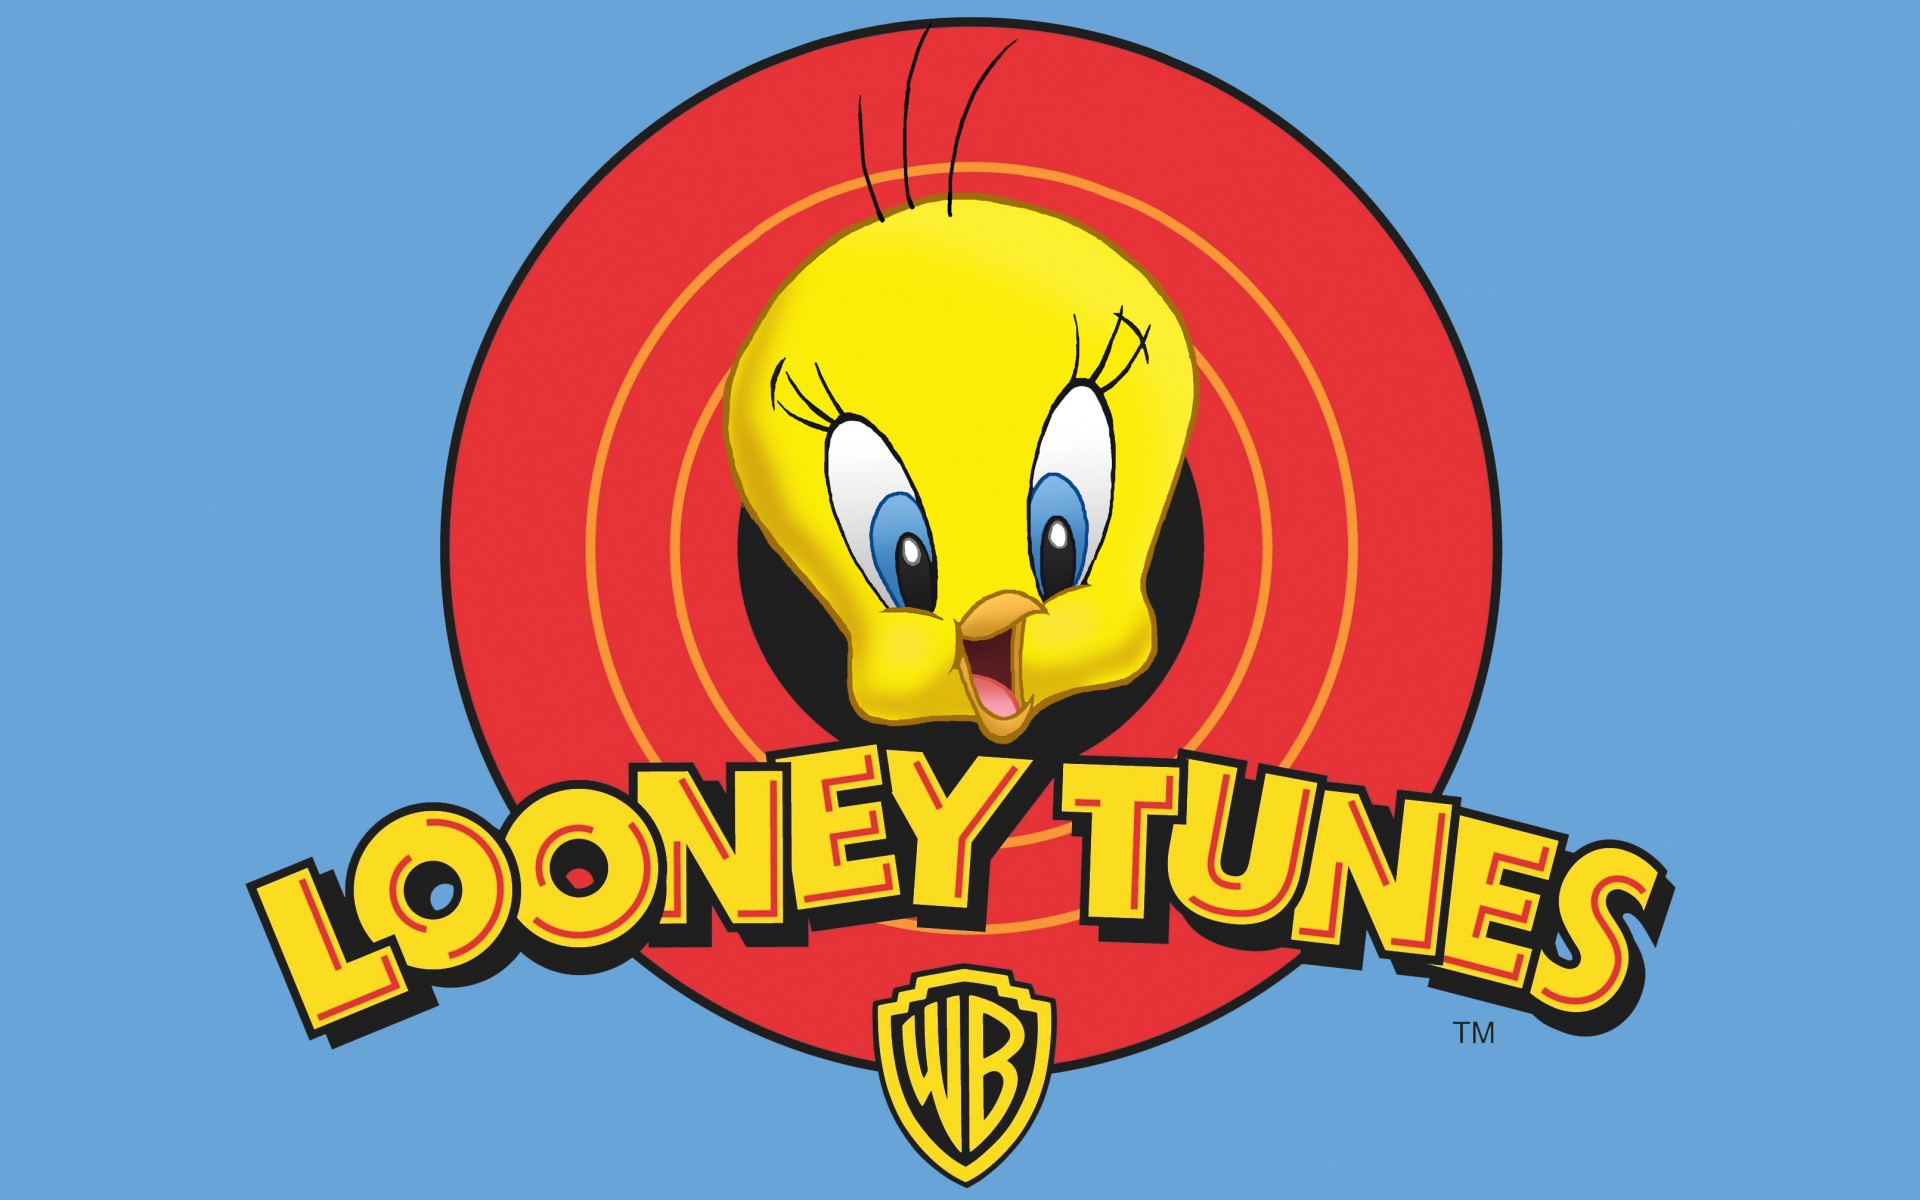  Tunes Tweety Cartoon picture Looney Tunes Tweety Cartoon wallpaper